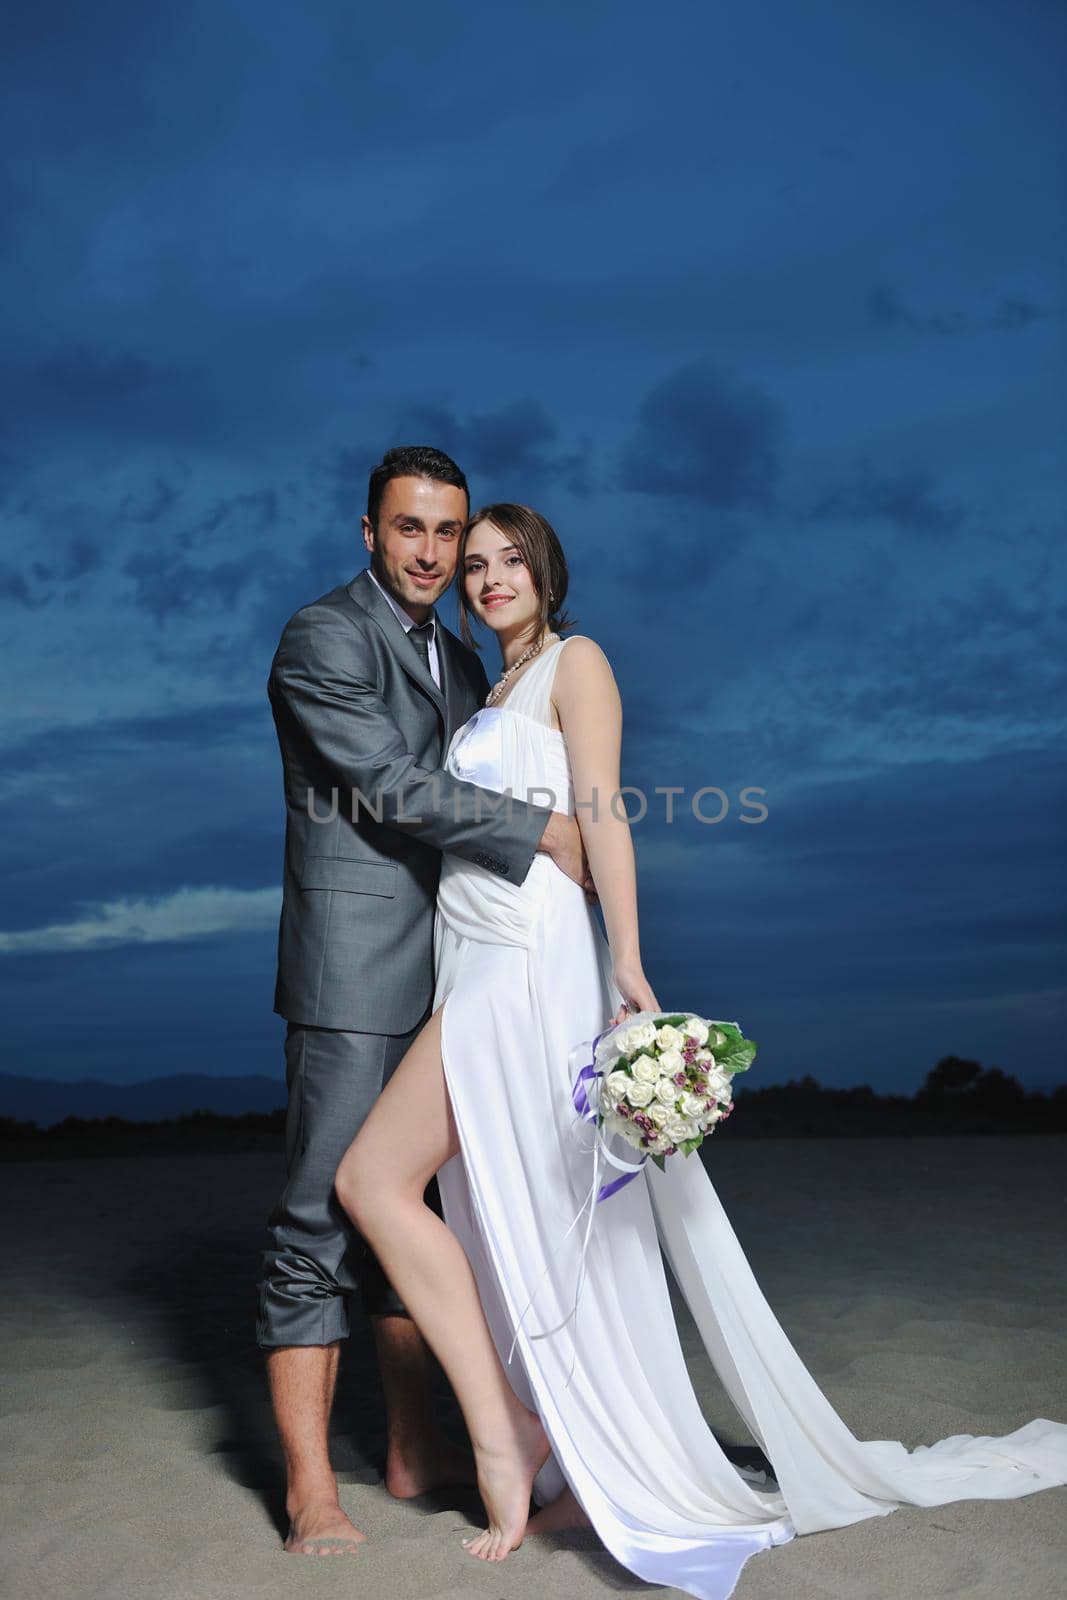 romantic beach wedding at sunset by dotshock